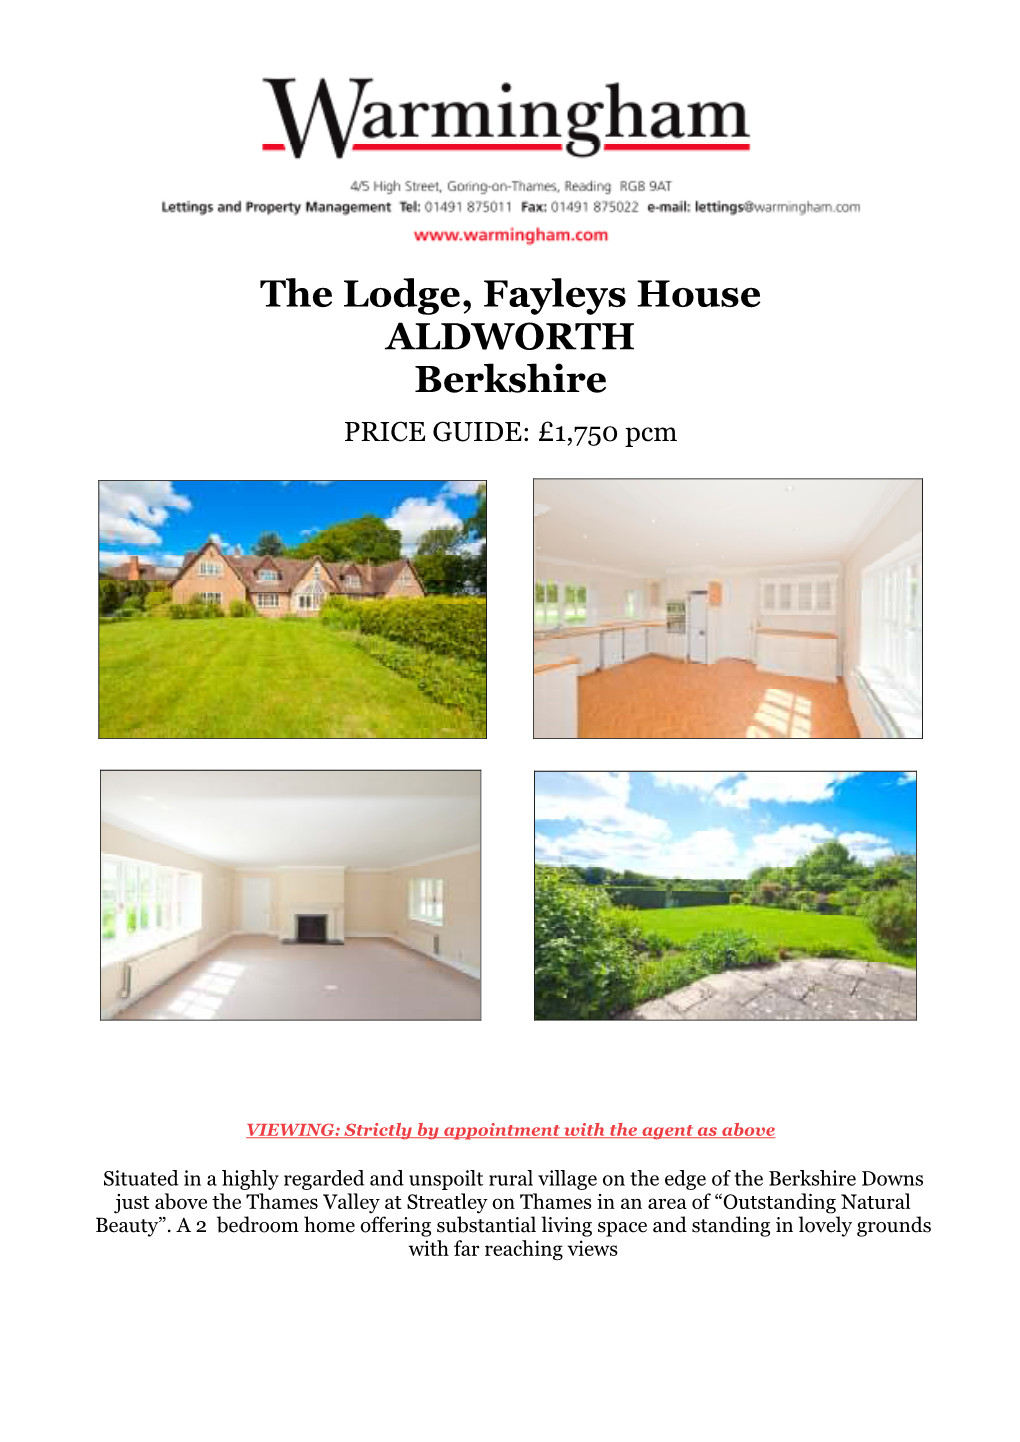 The Lodge, Fayleys House ALDWORTH Berkshire